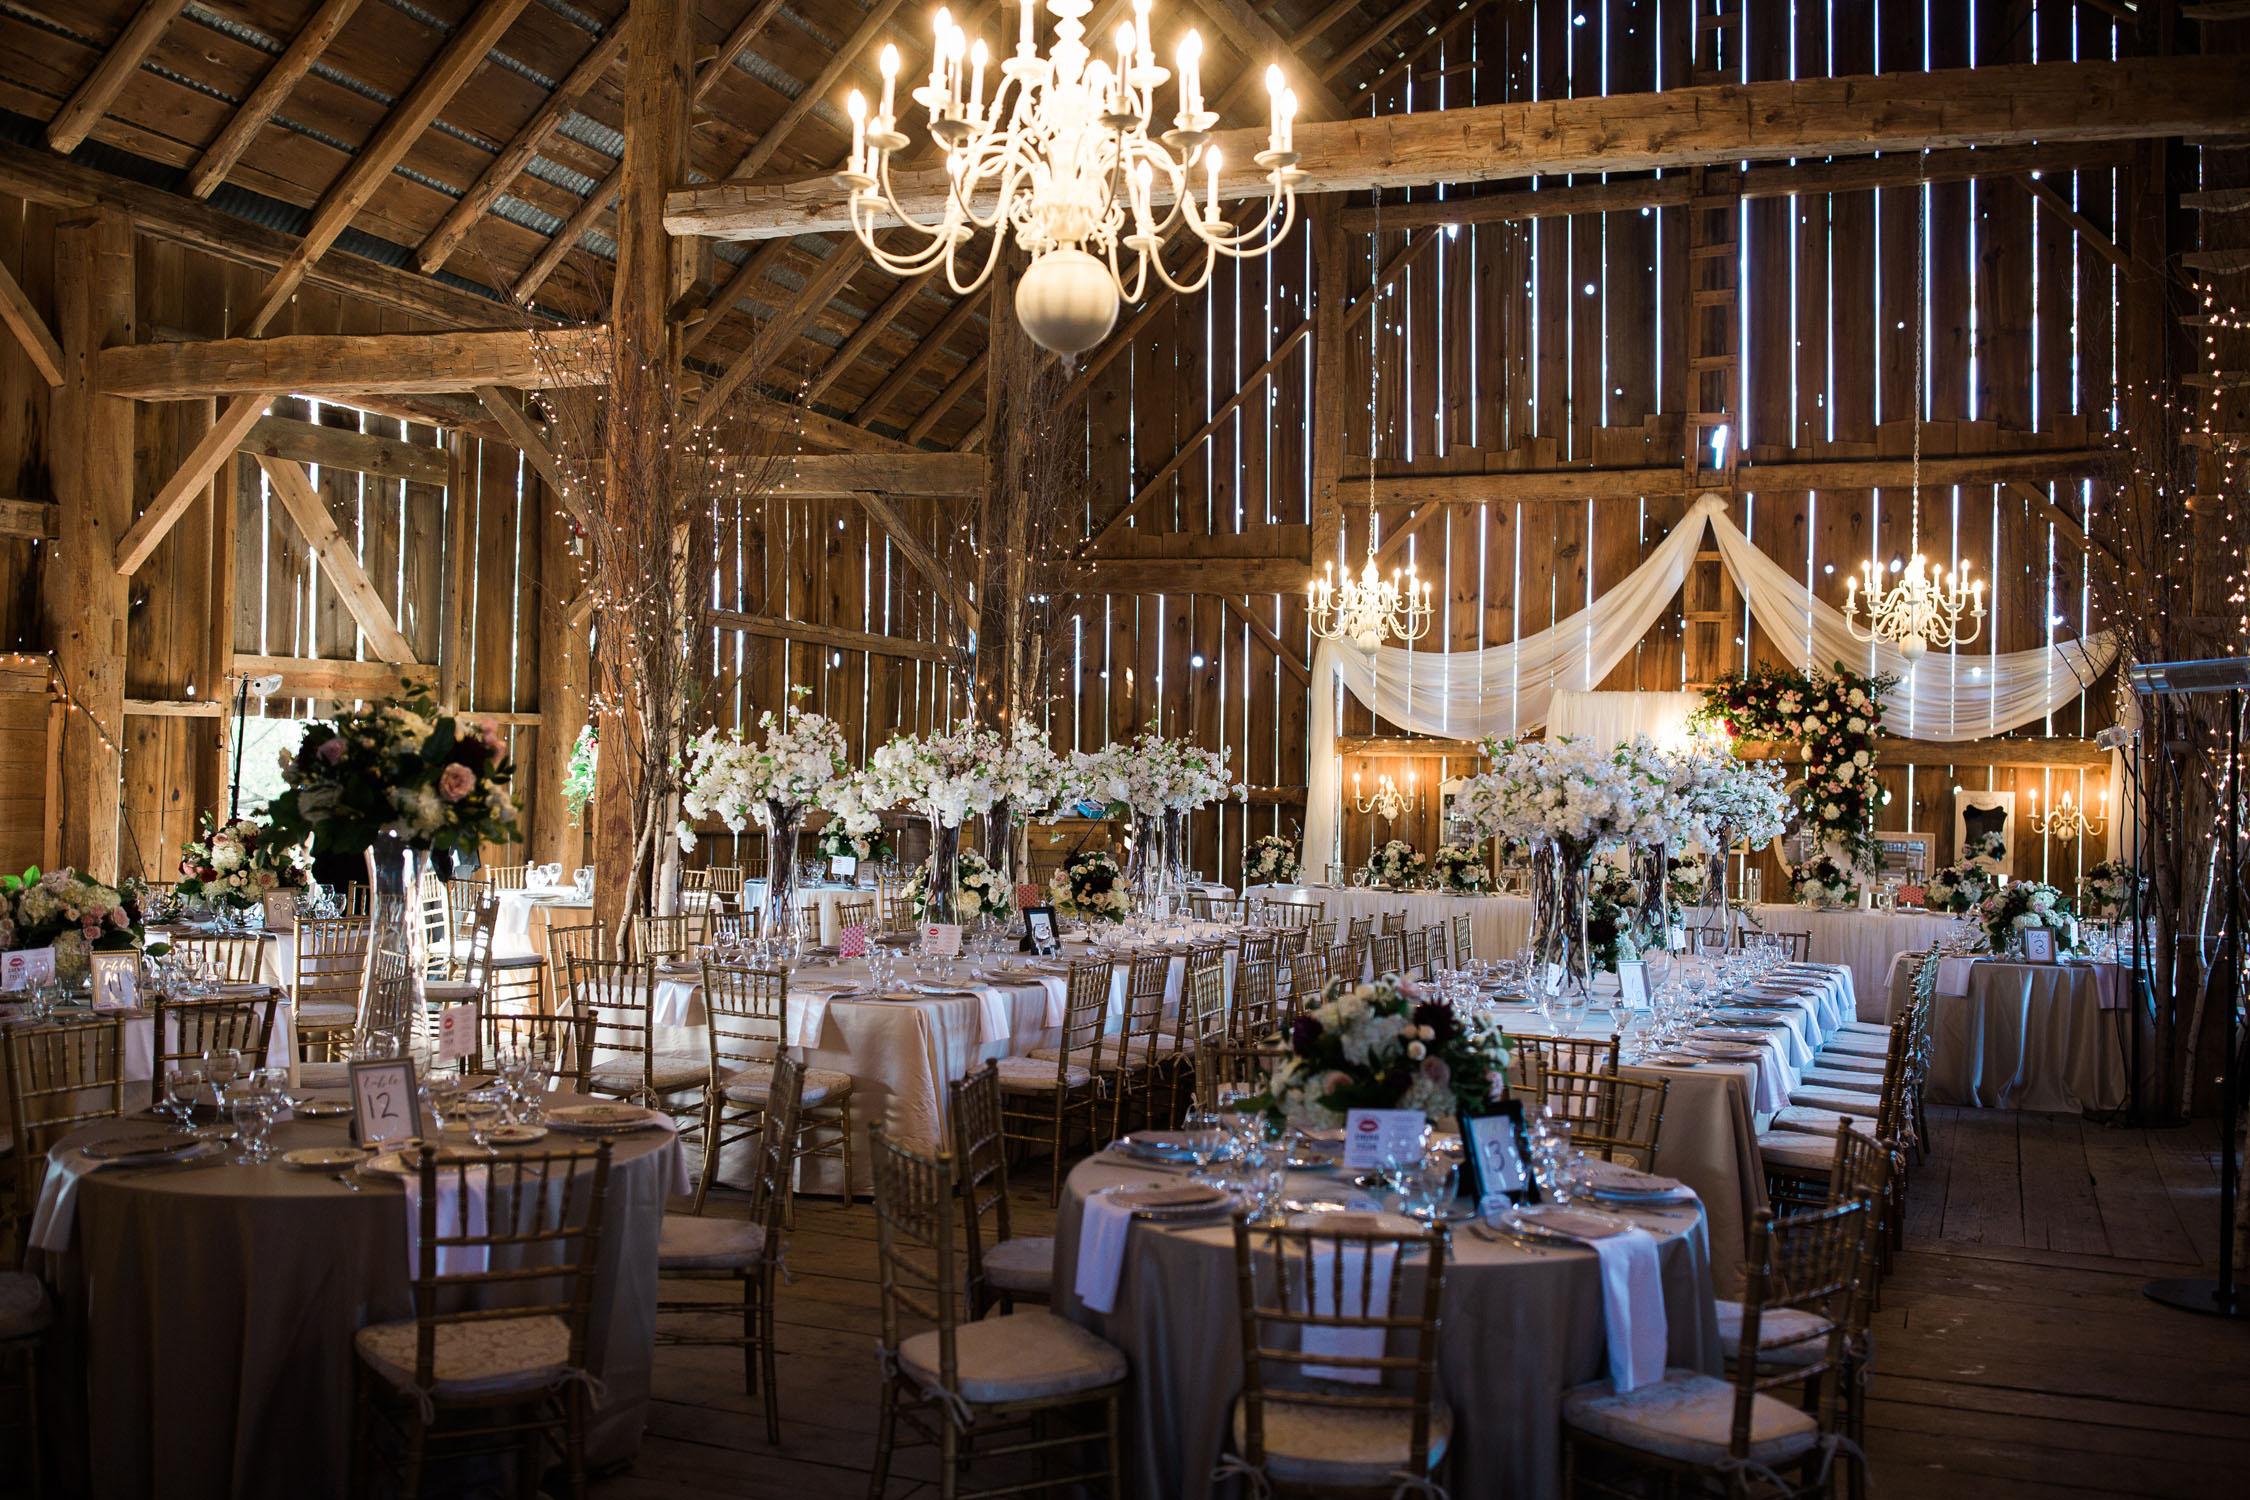 Stunning picture of decor in Century Barn Wedding.